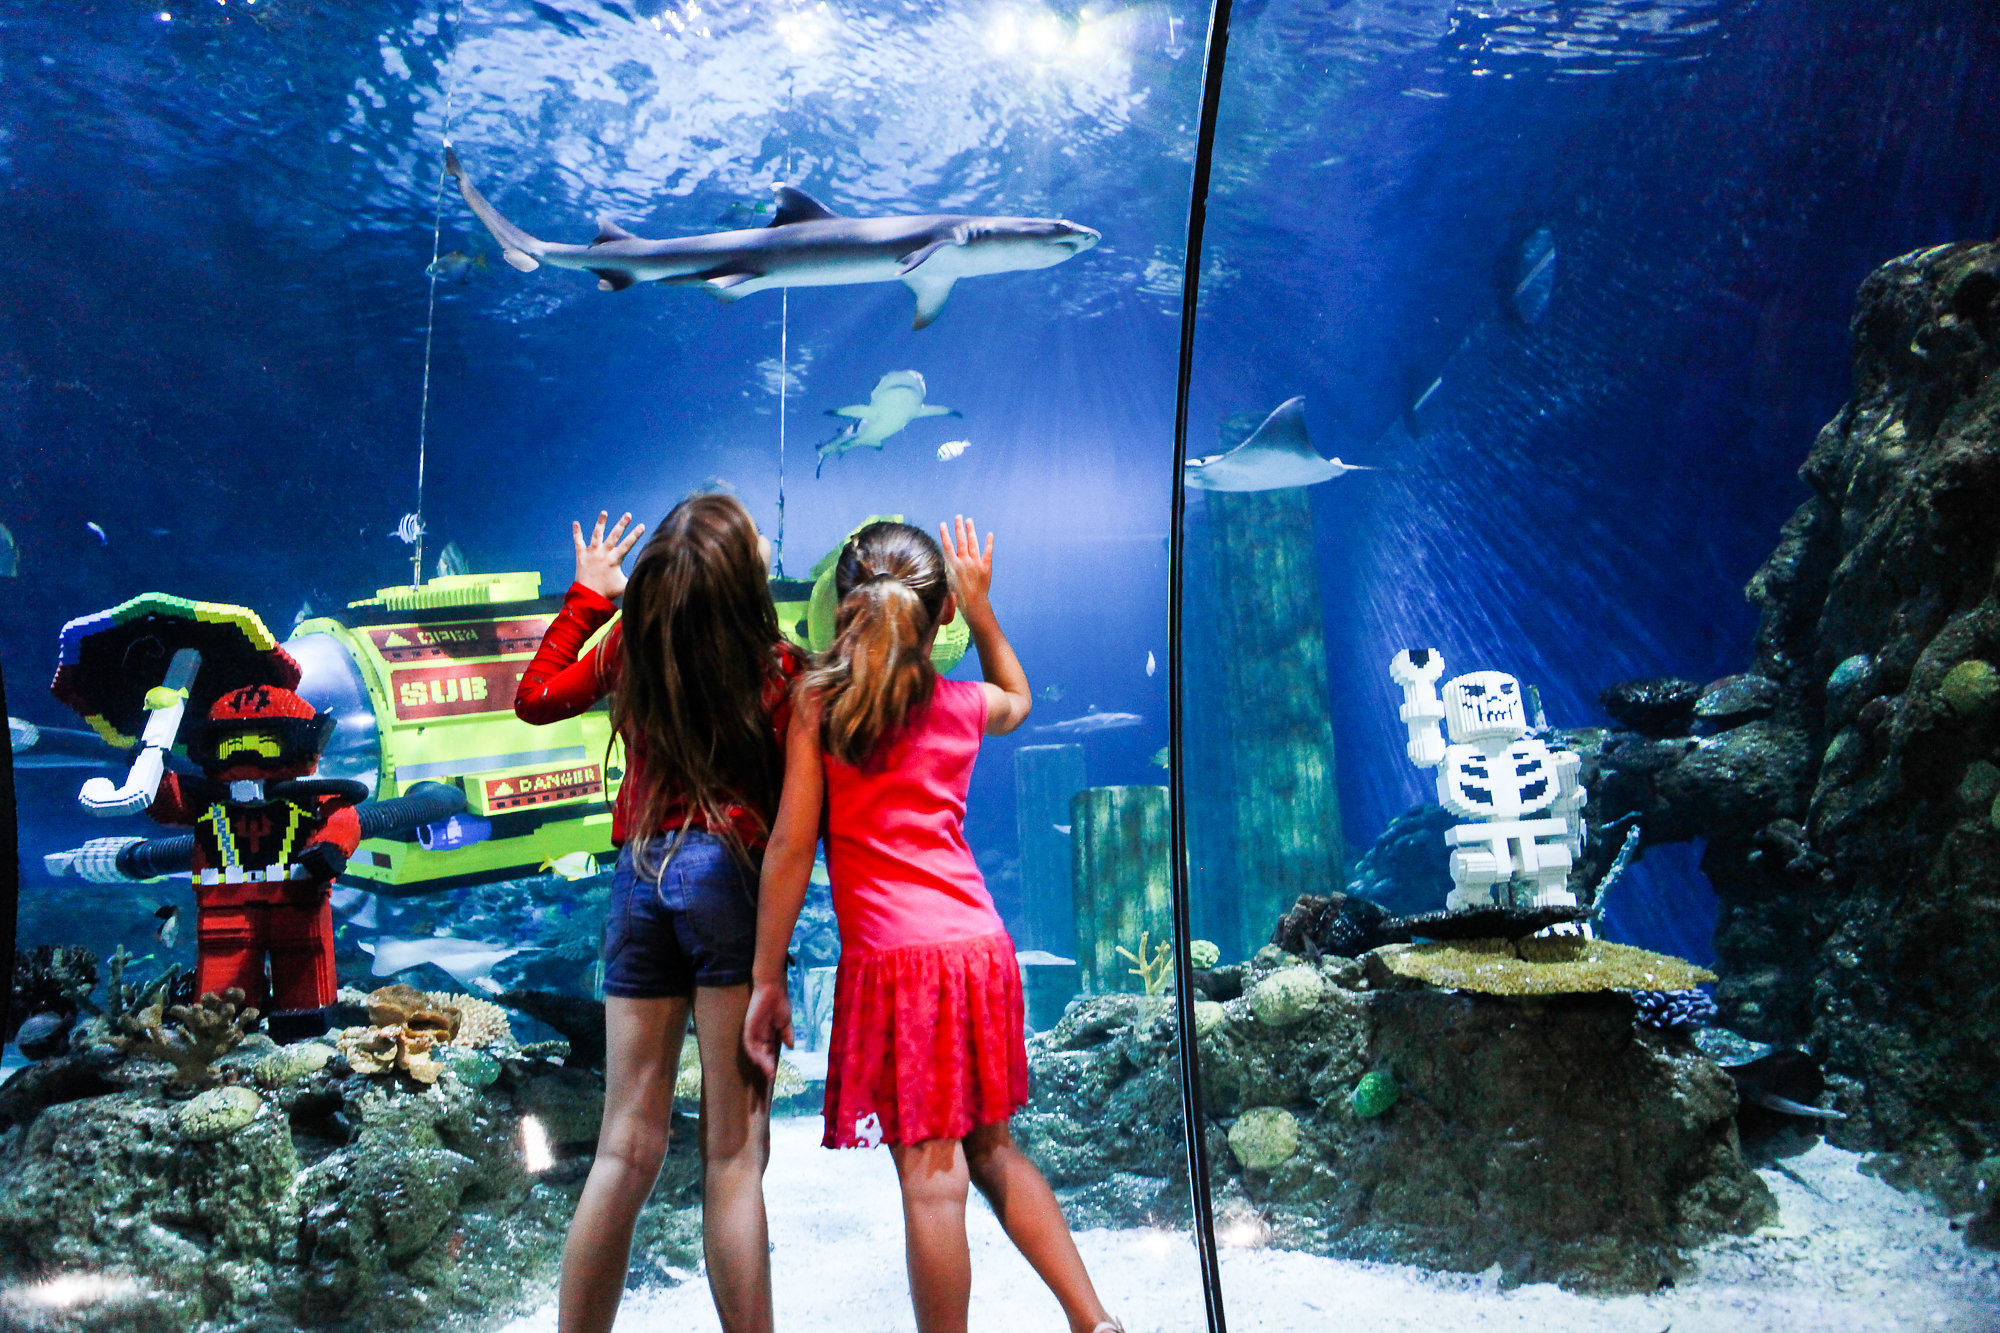 Check out the Sea Life Aquarium